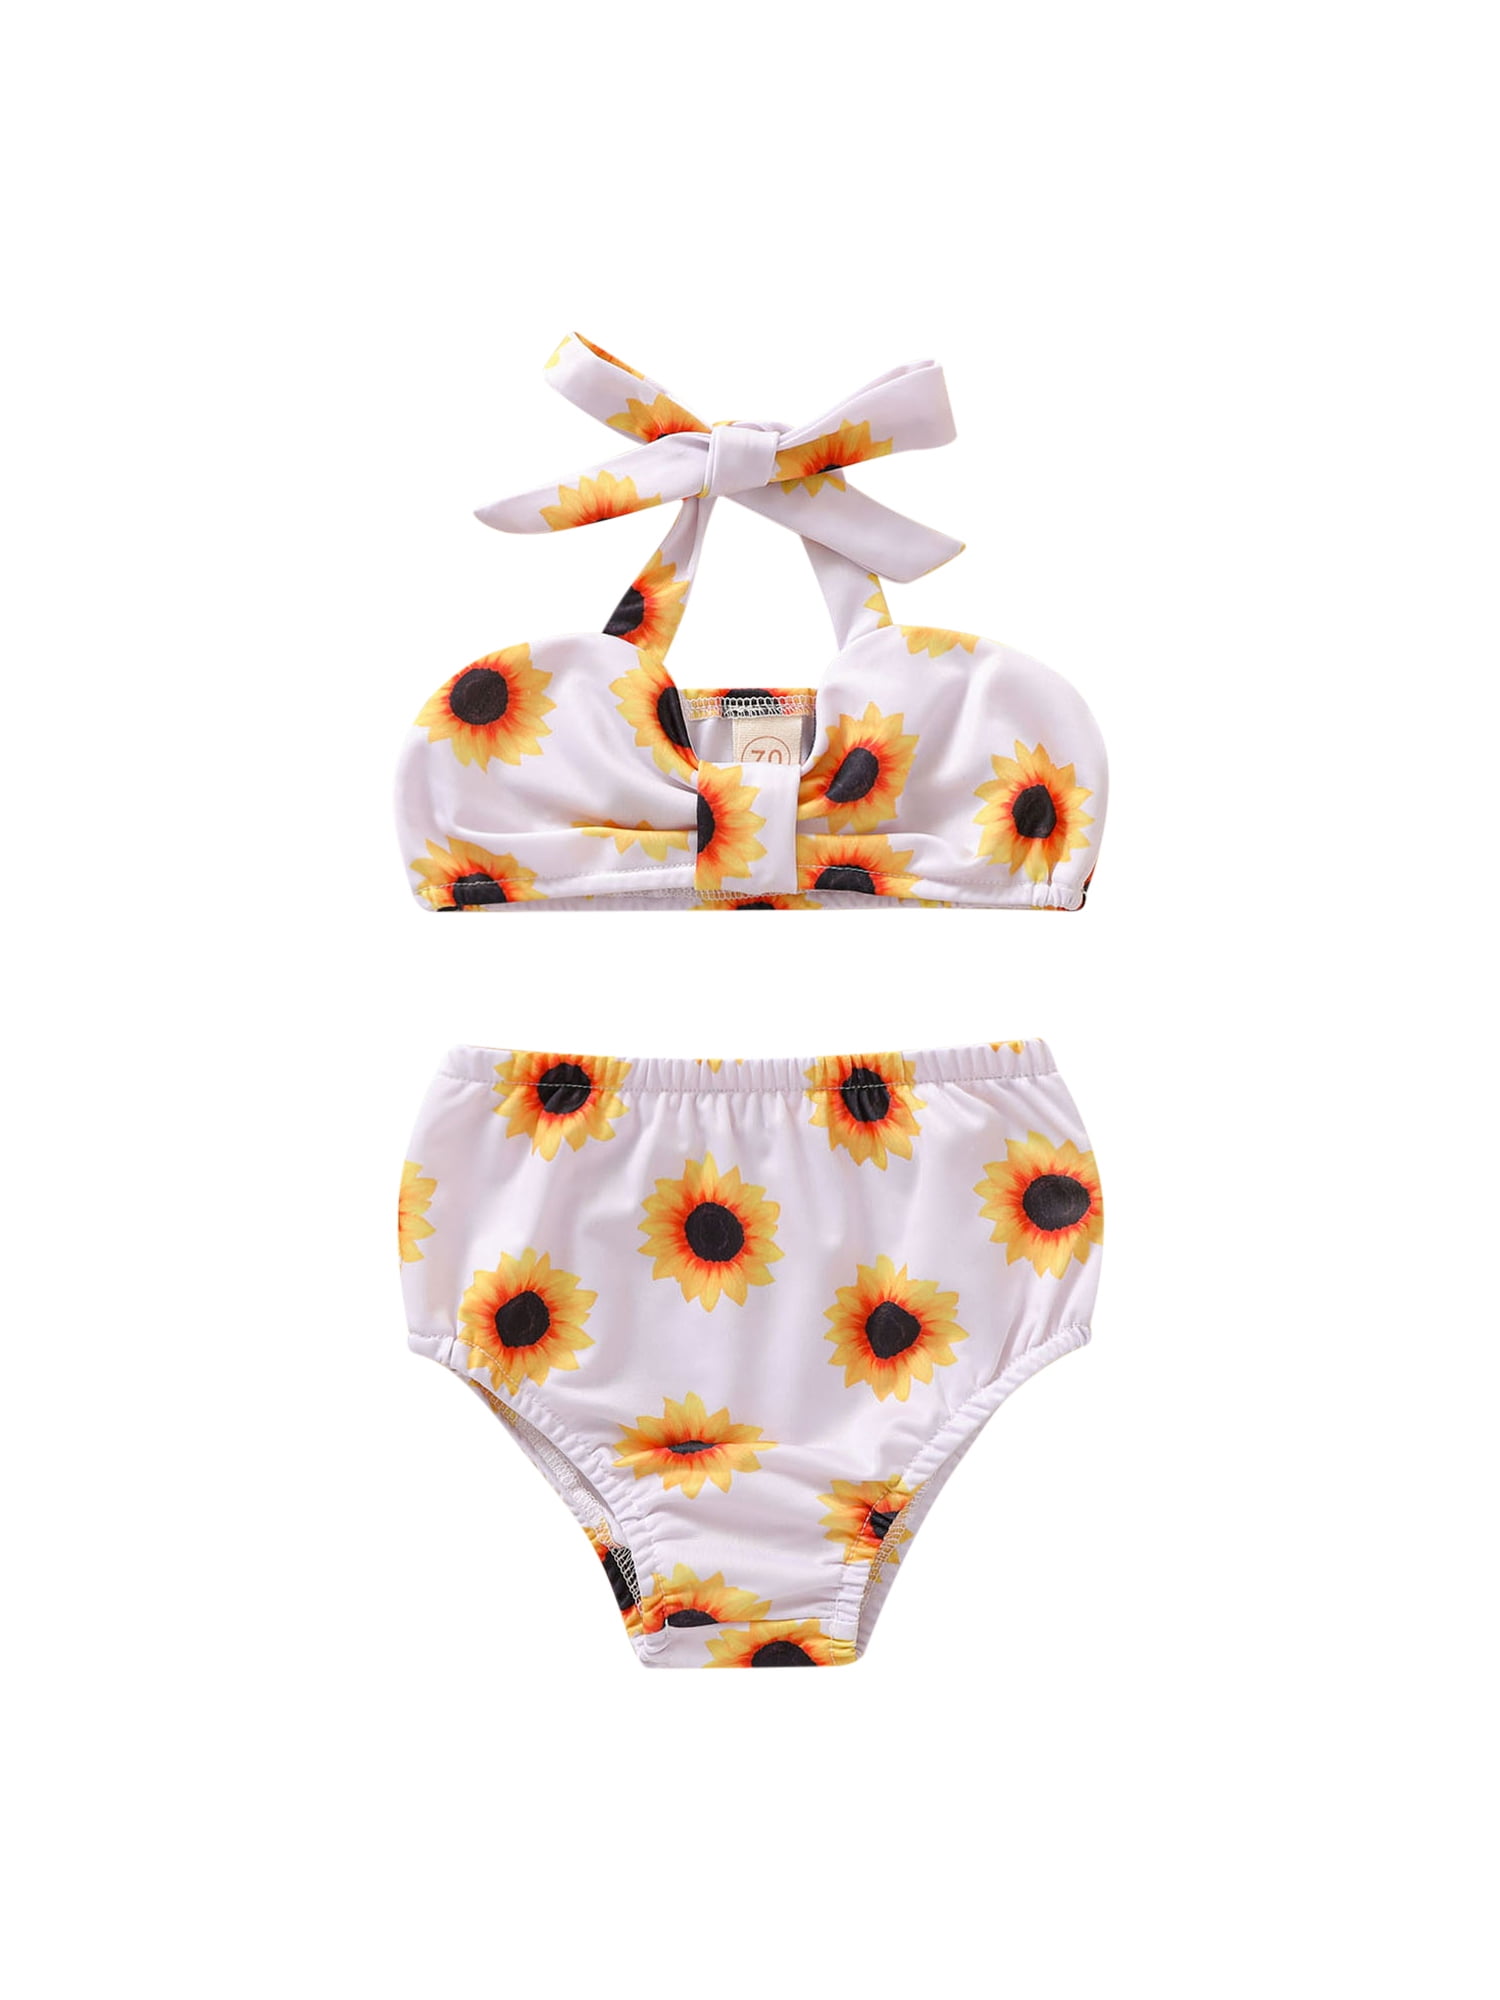 2Pcs Baby Girls Halter Bowknot Tube Top+Floral Short Bottoms Bikini Bathing Suit Swinwear Floral, 0-6Months